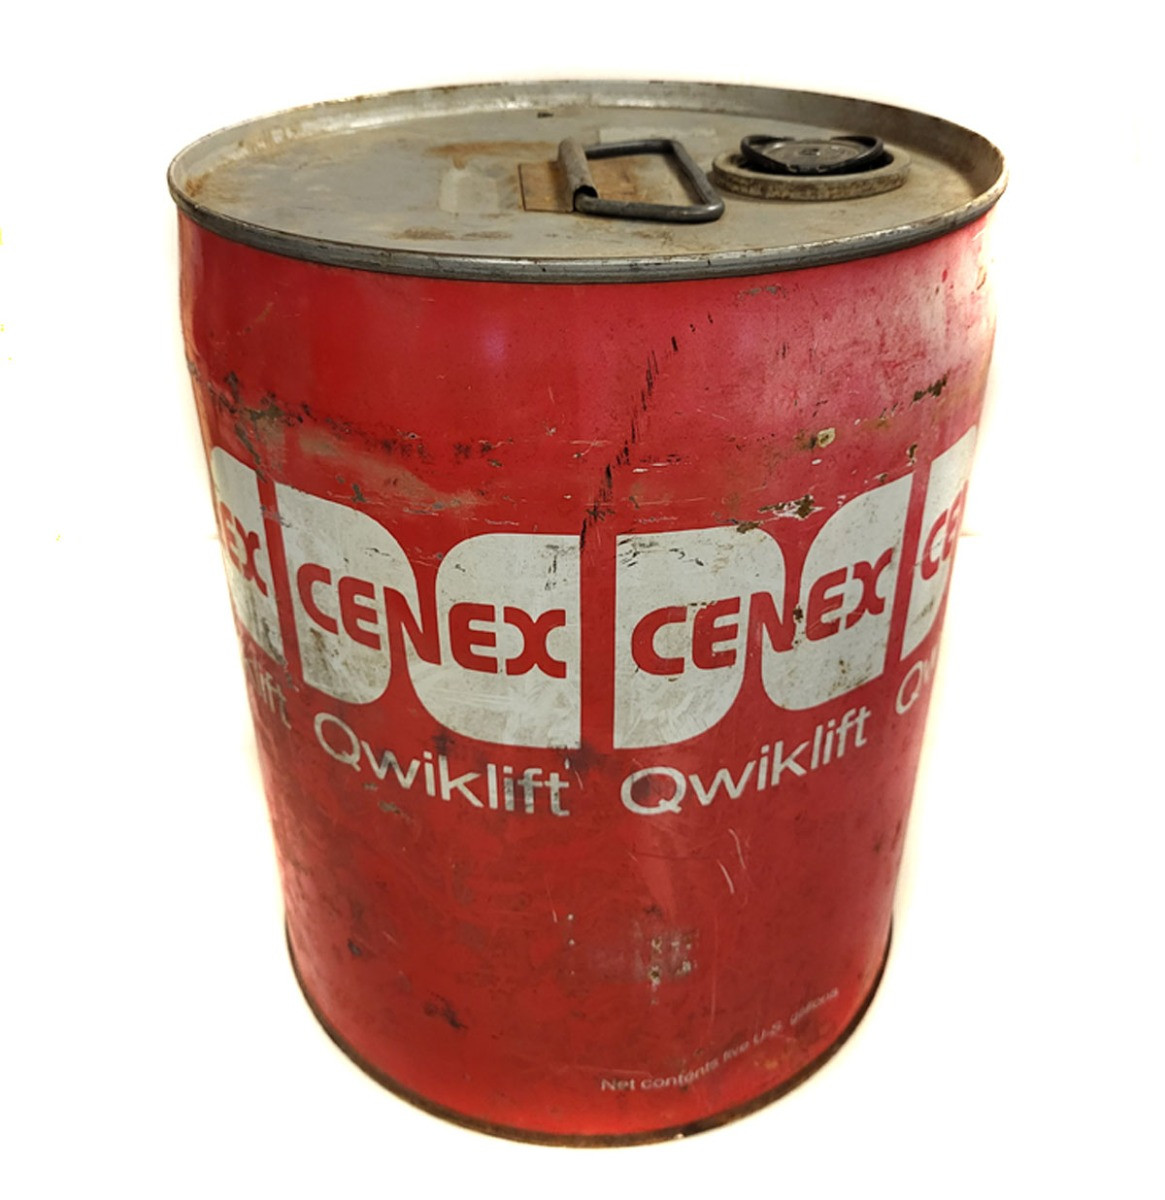 Cenex Qwiklift Olieblik - Origineel